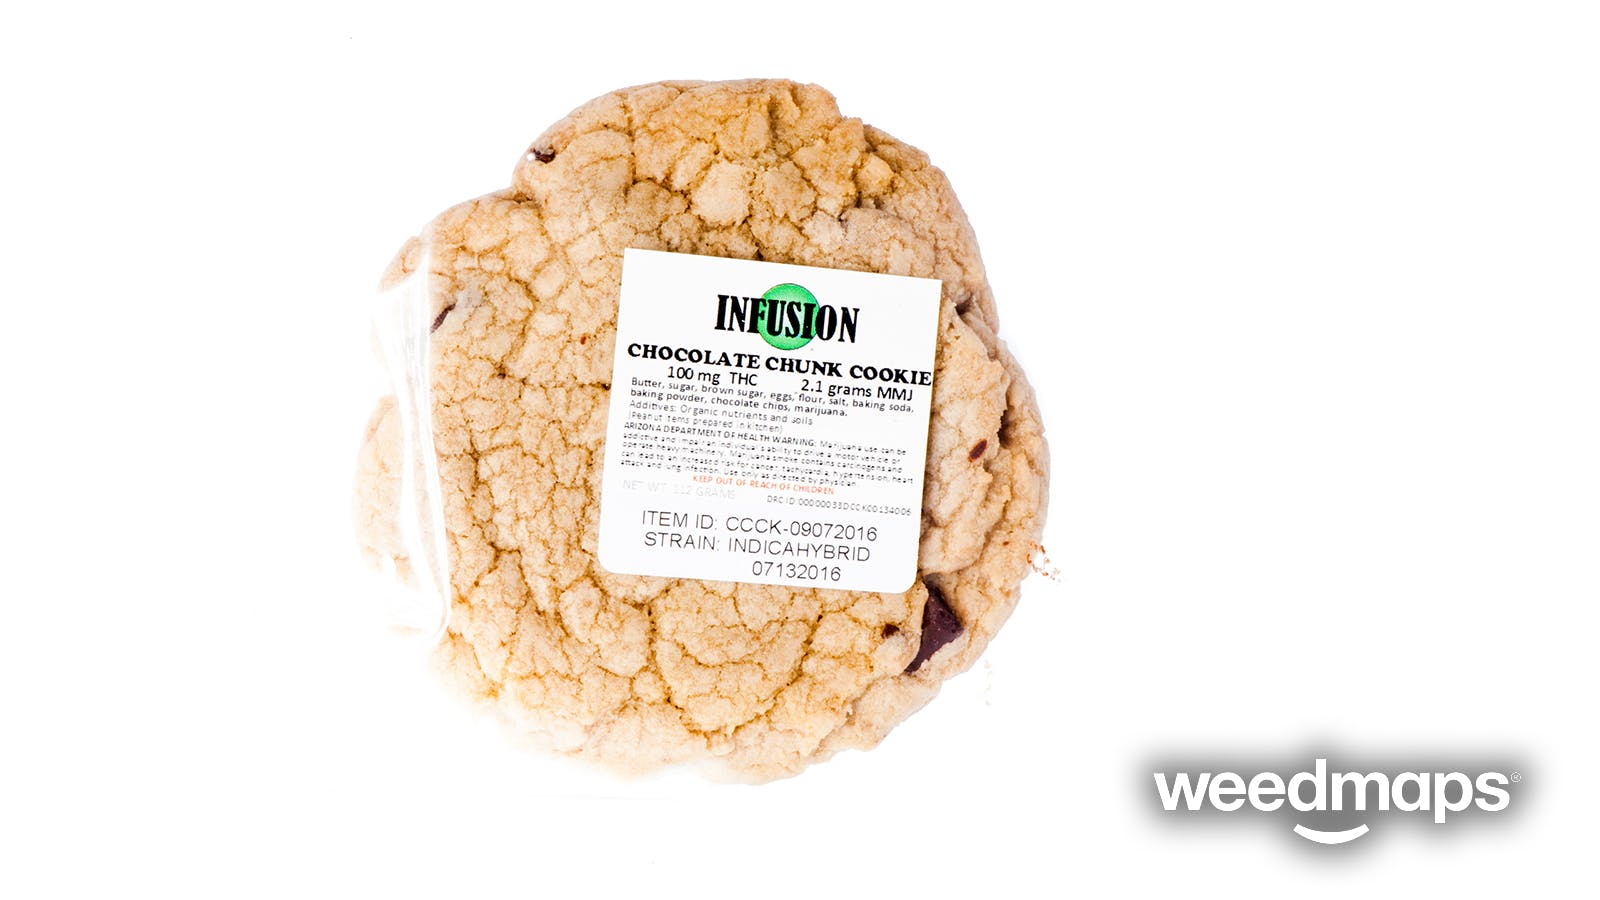 edible-infusion-100mg-chocolate-chunk-cookie